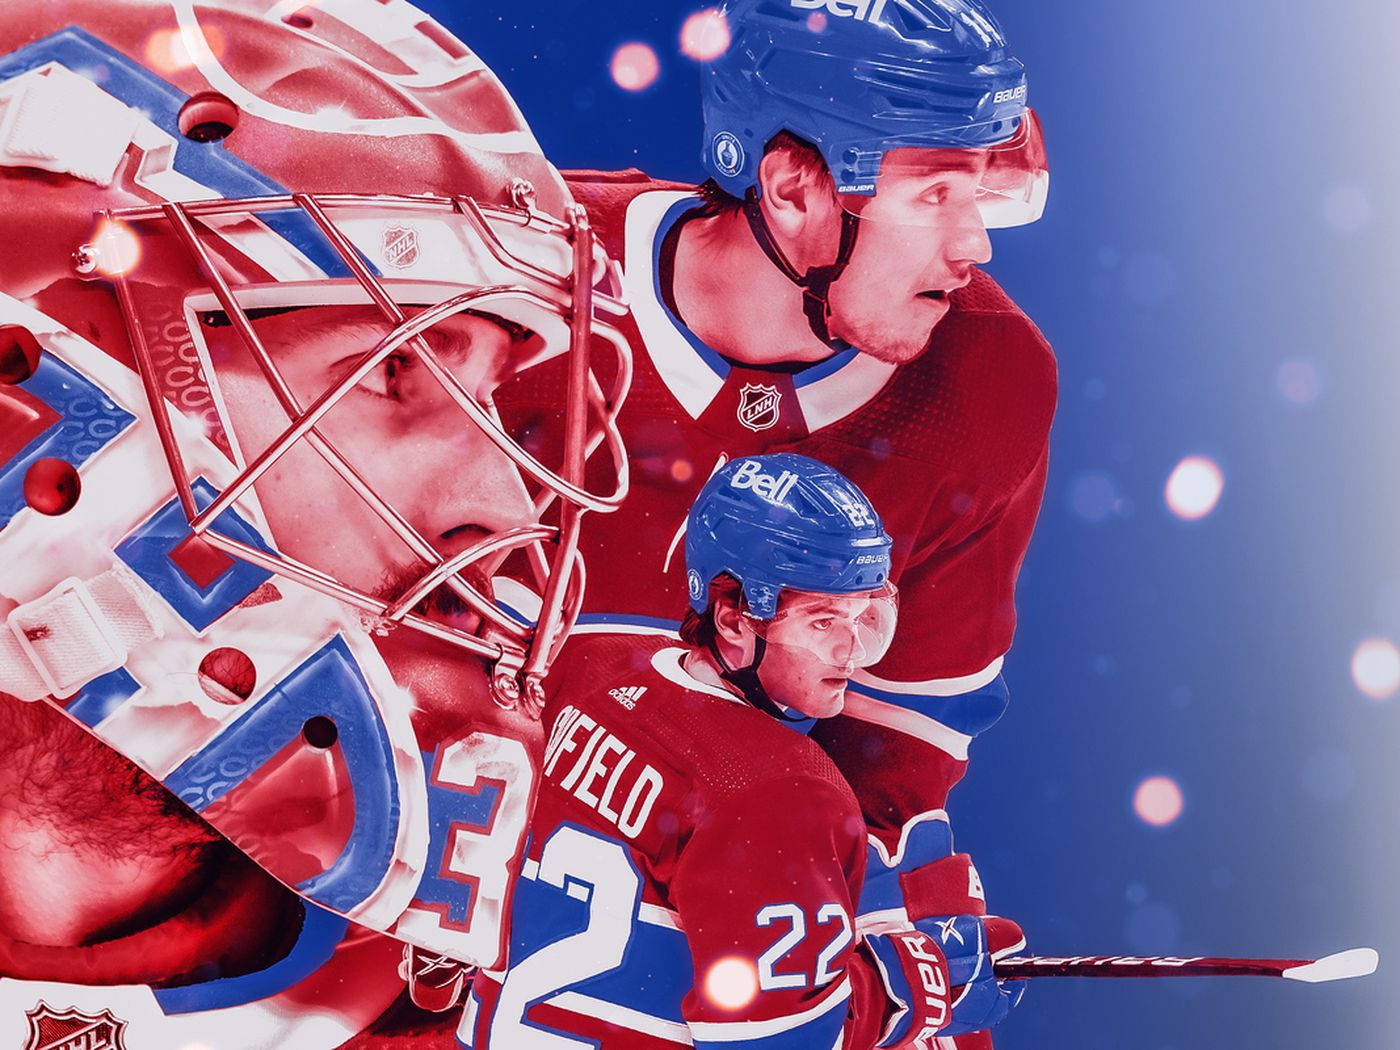 Nhl Montreal Canadiens Fanart Affisch Wallpaper